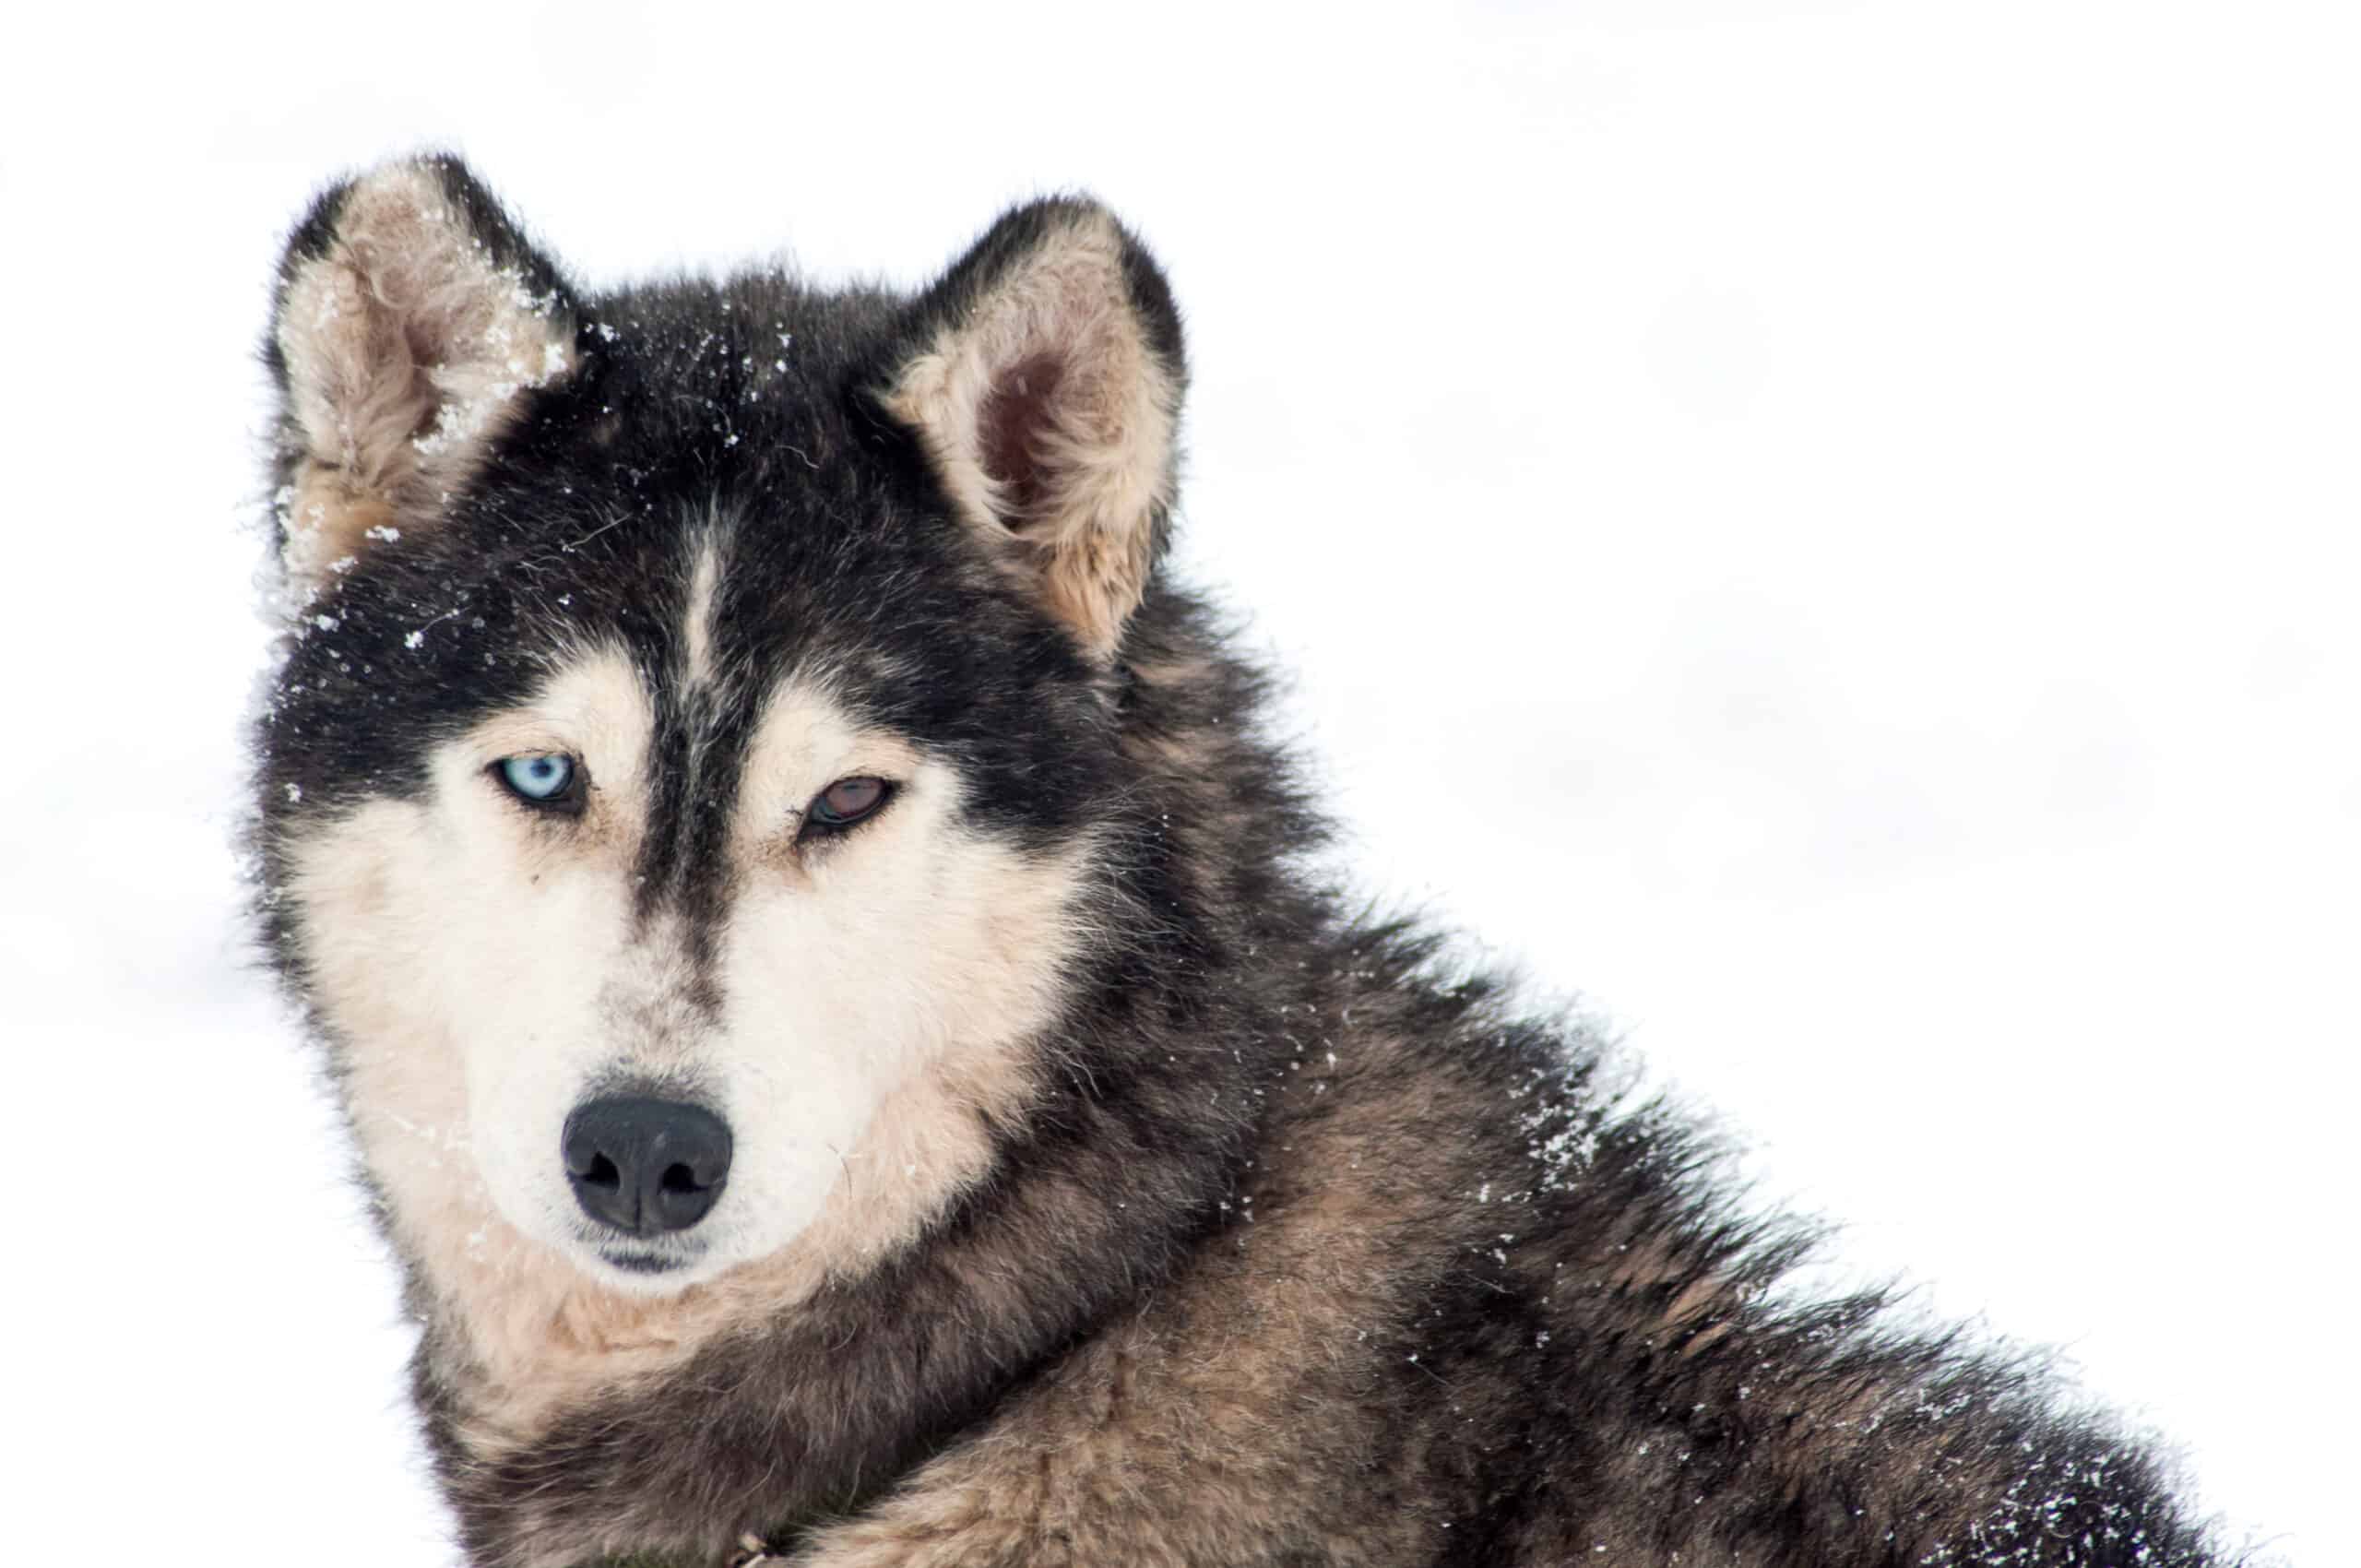 Can huskies sleep outside in winter?